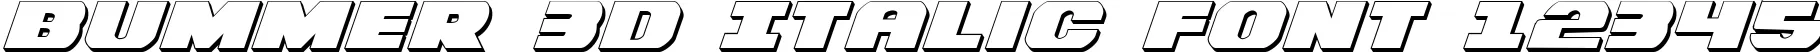 Dynamic Bummer 3D Italic Font Preview https://safirsoft.com